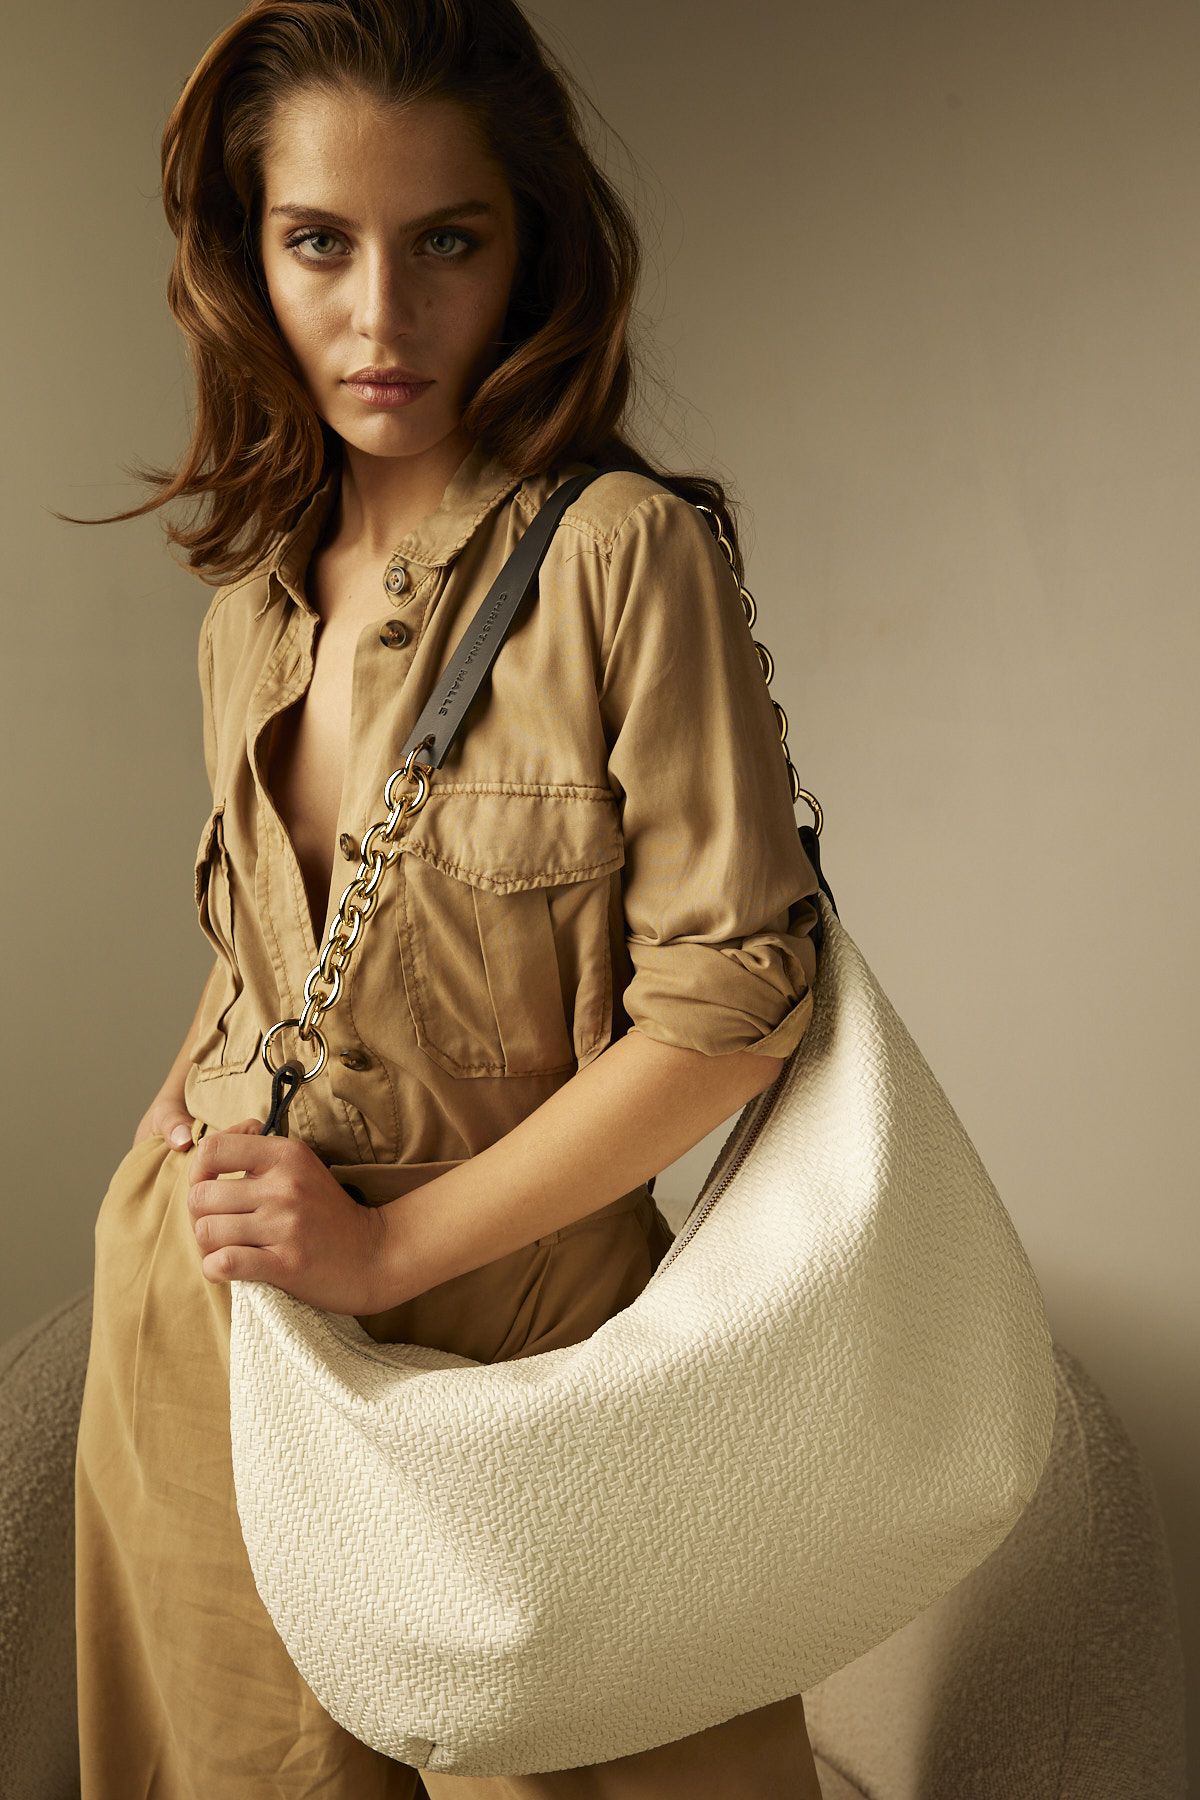 White Straw Hobo - Shoulder Bag by Christina Malle CM97006